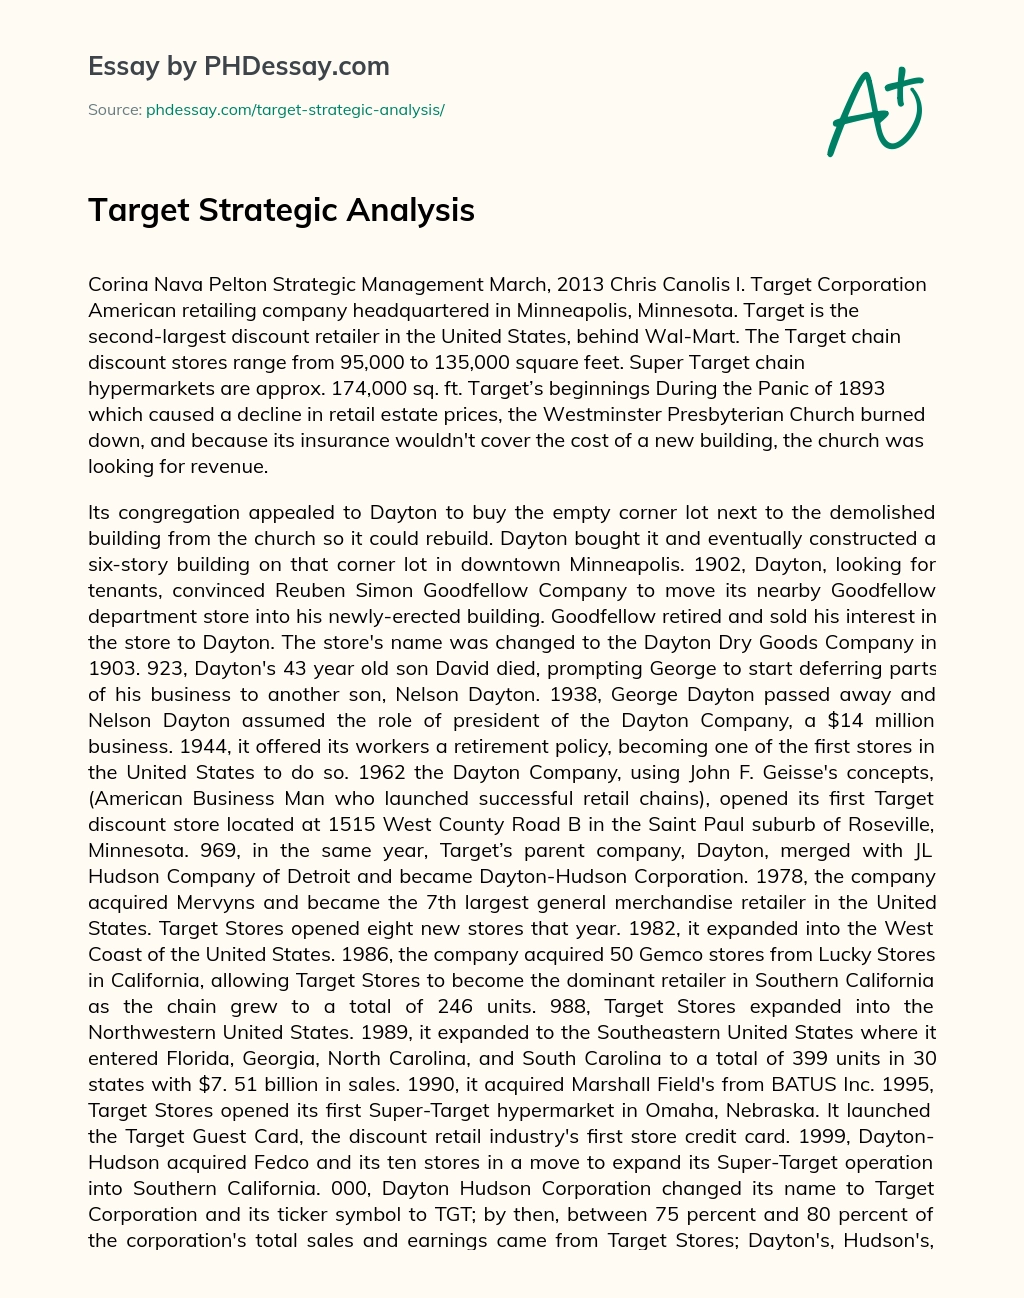 Target Strategic Analysis essay